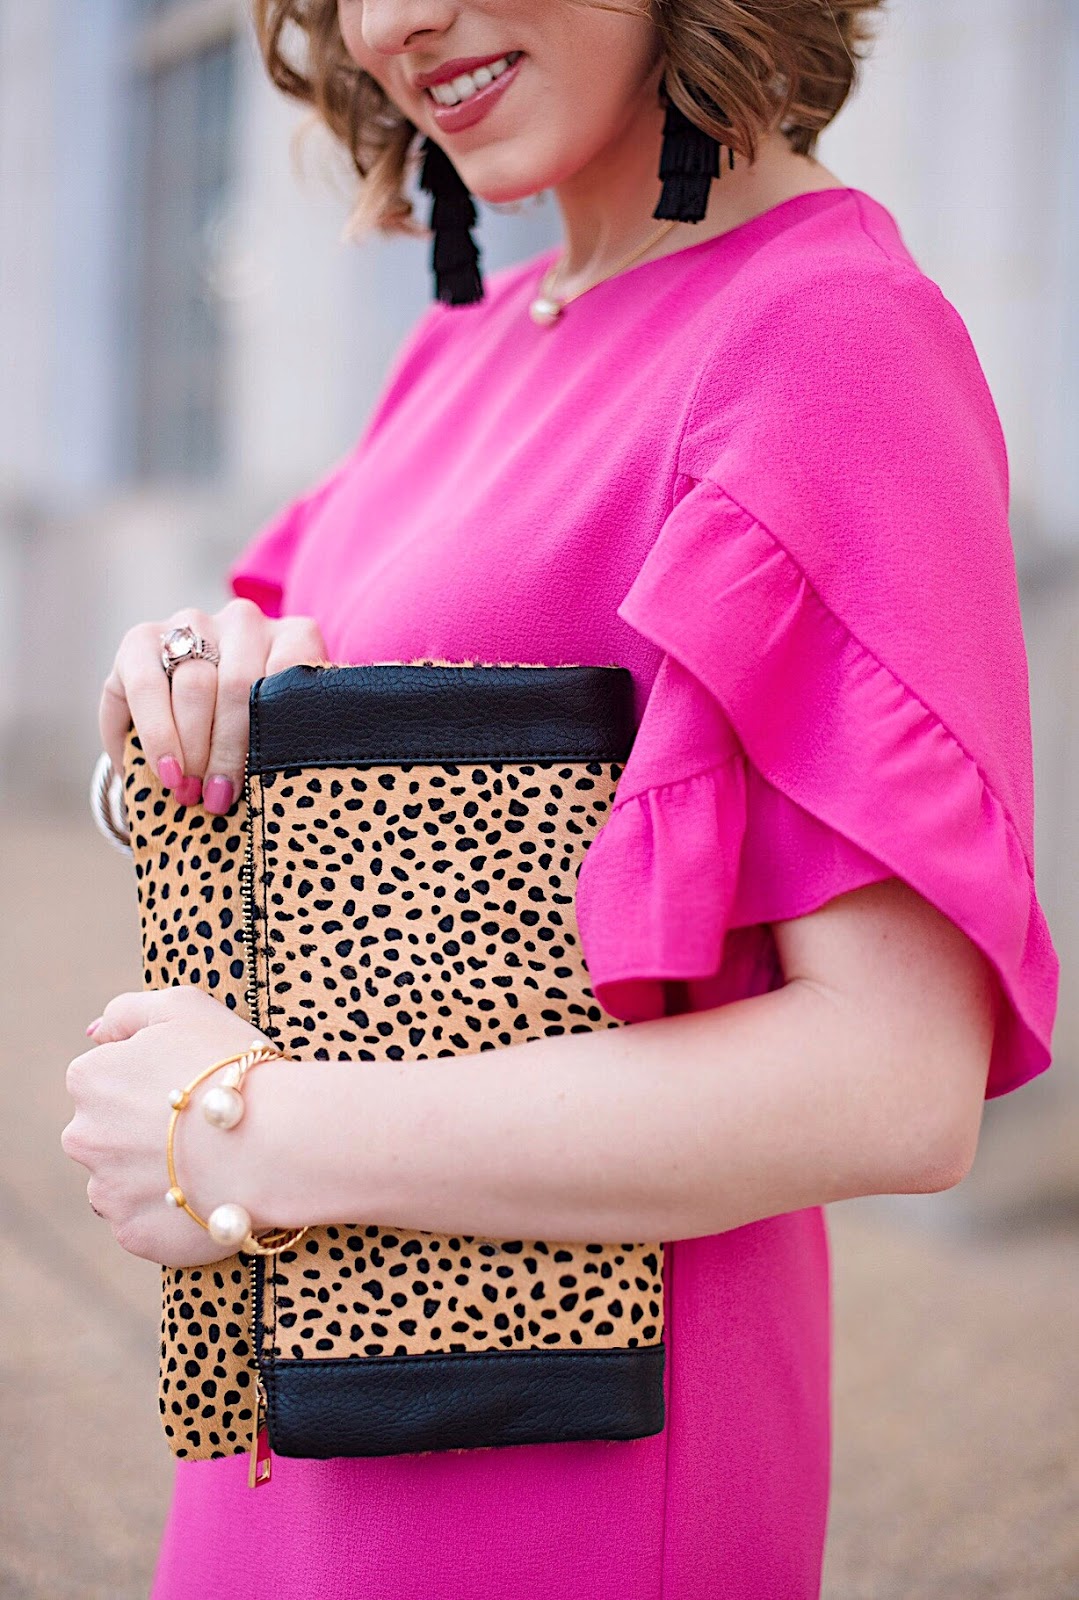 Pink, Black and Leopard - Something Delightful Blog